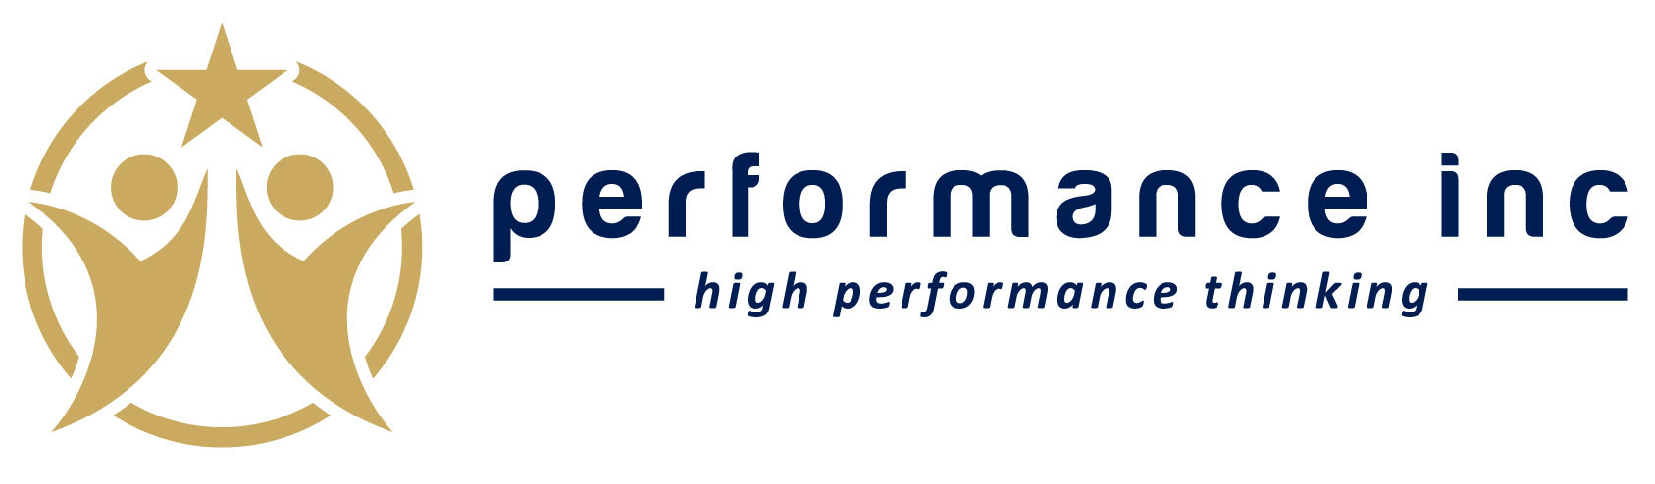 Performance Inc High Performance Thinking